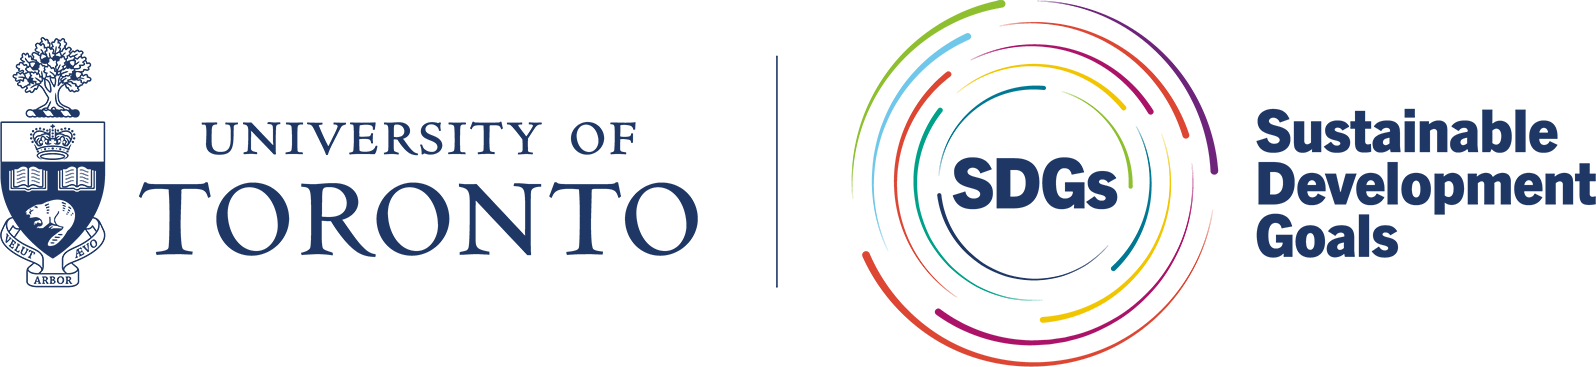 SDGs @ UofT logo